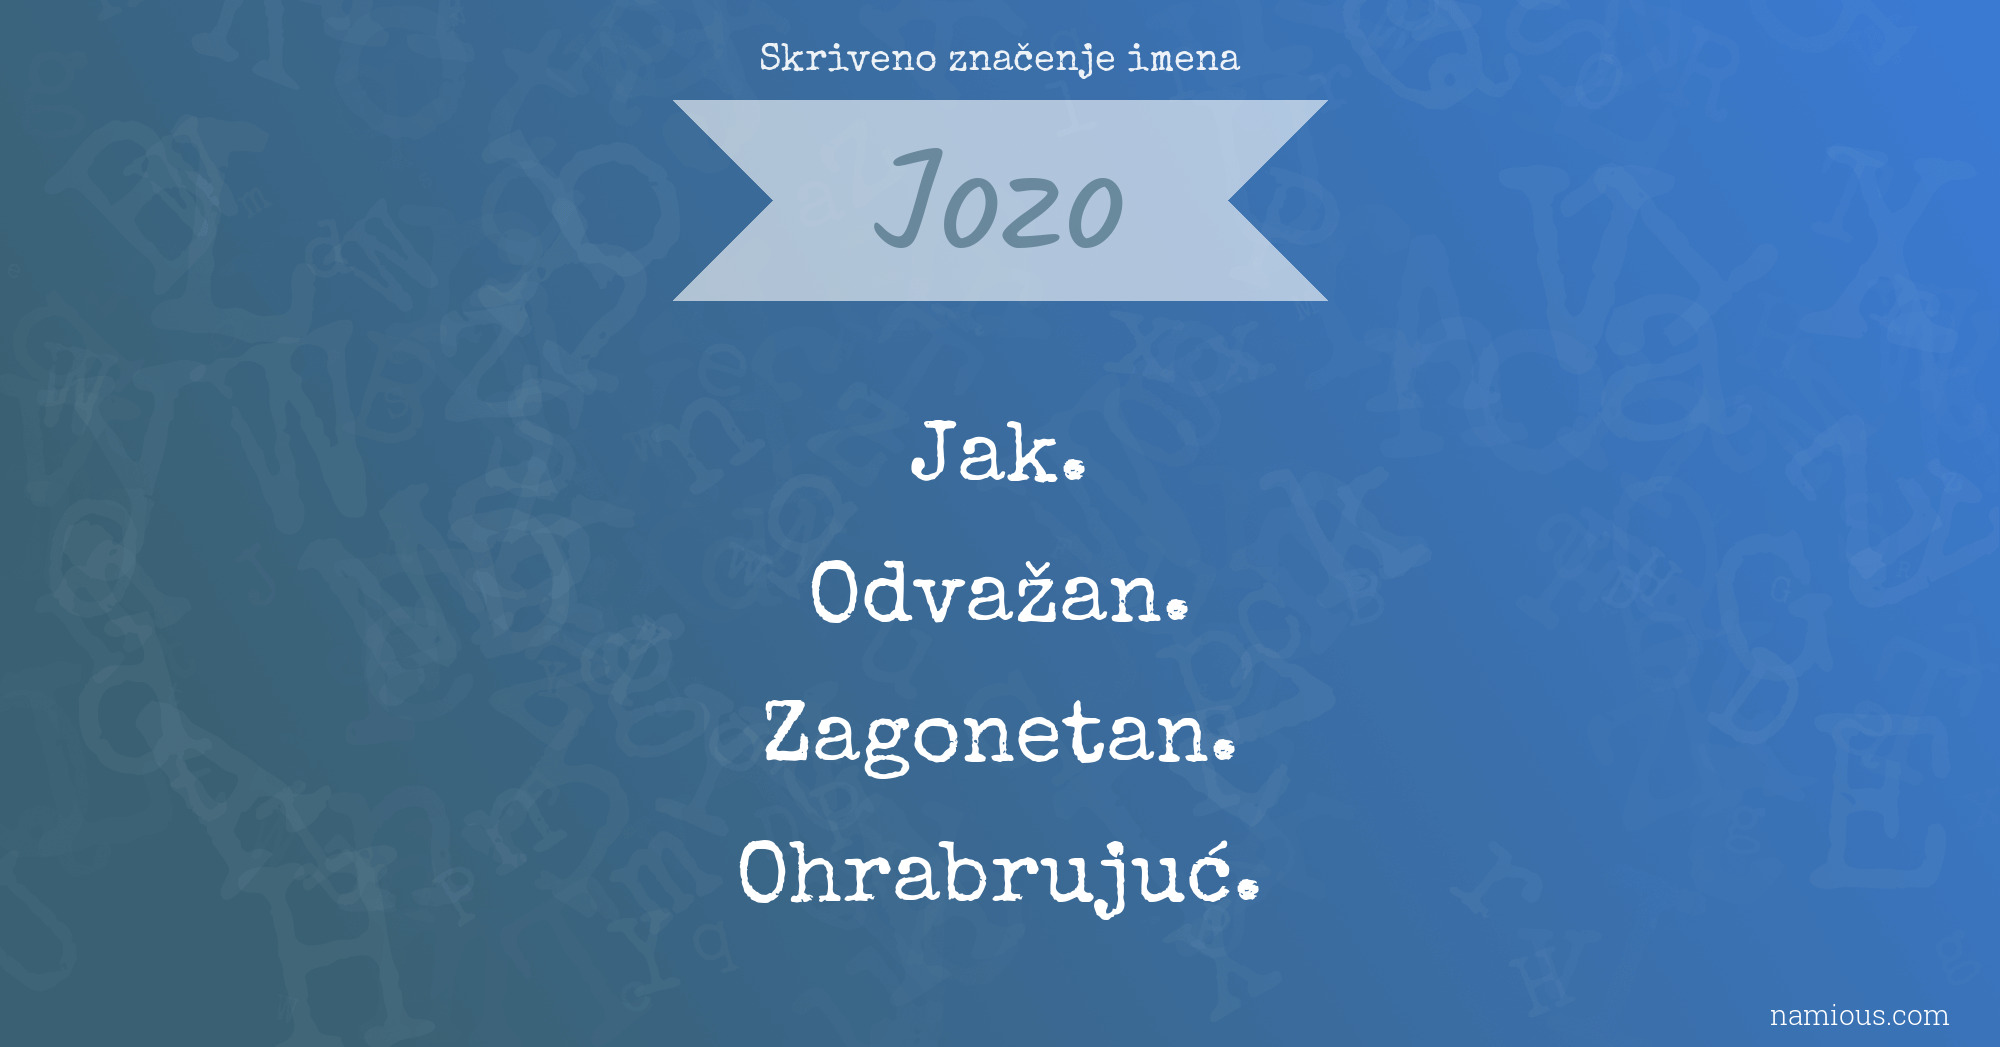 Skriveno značenje imena Jozo